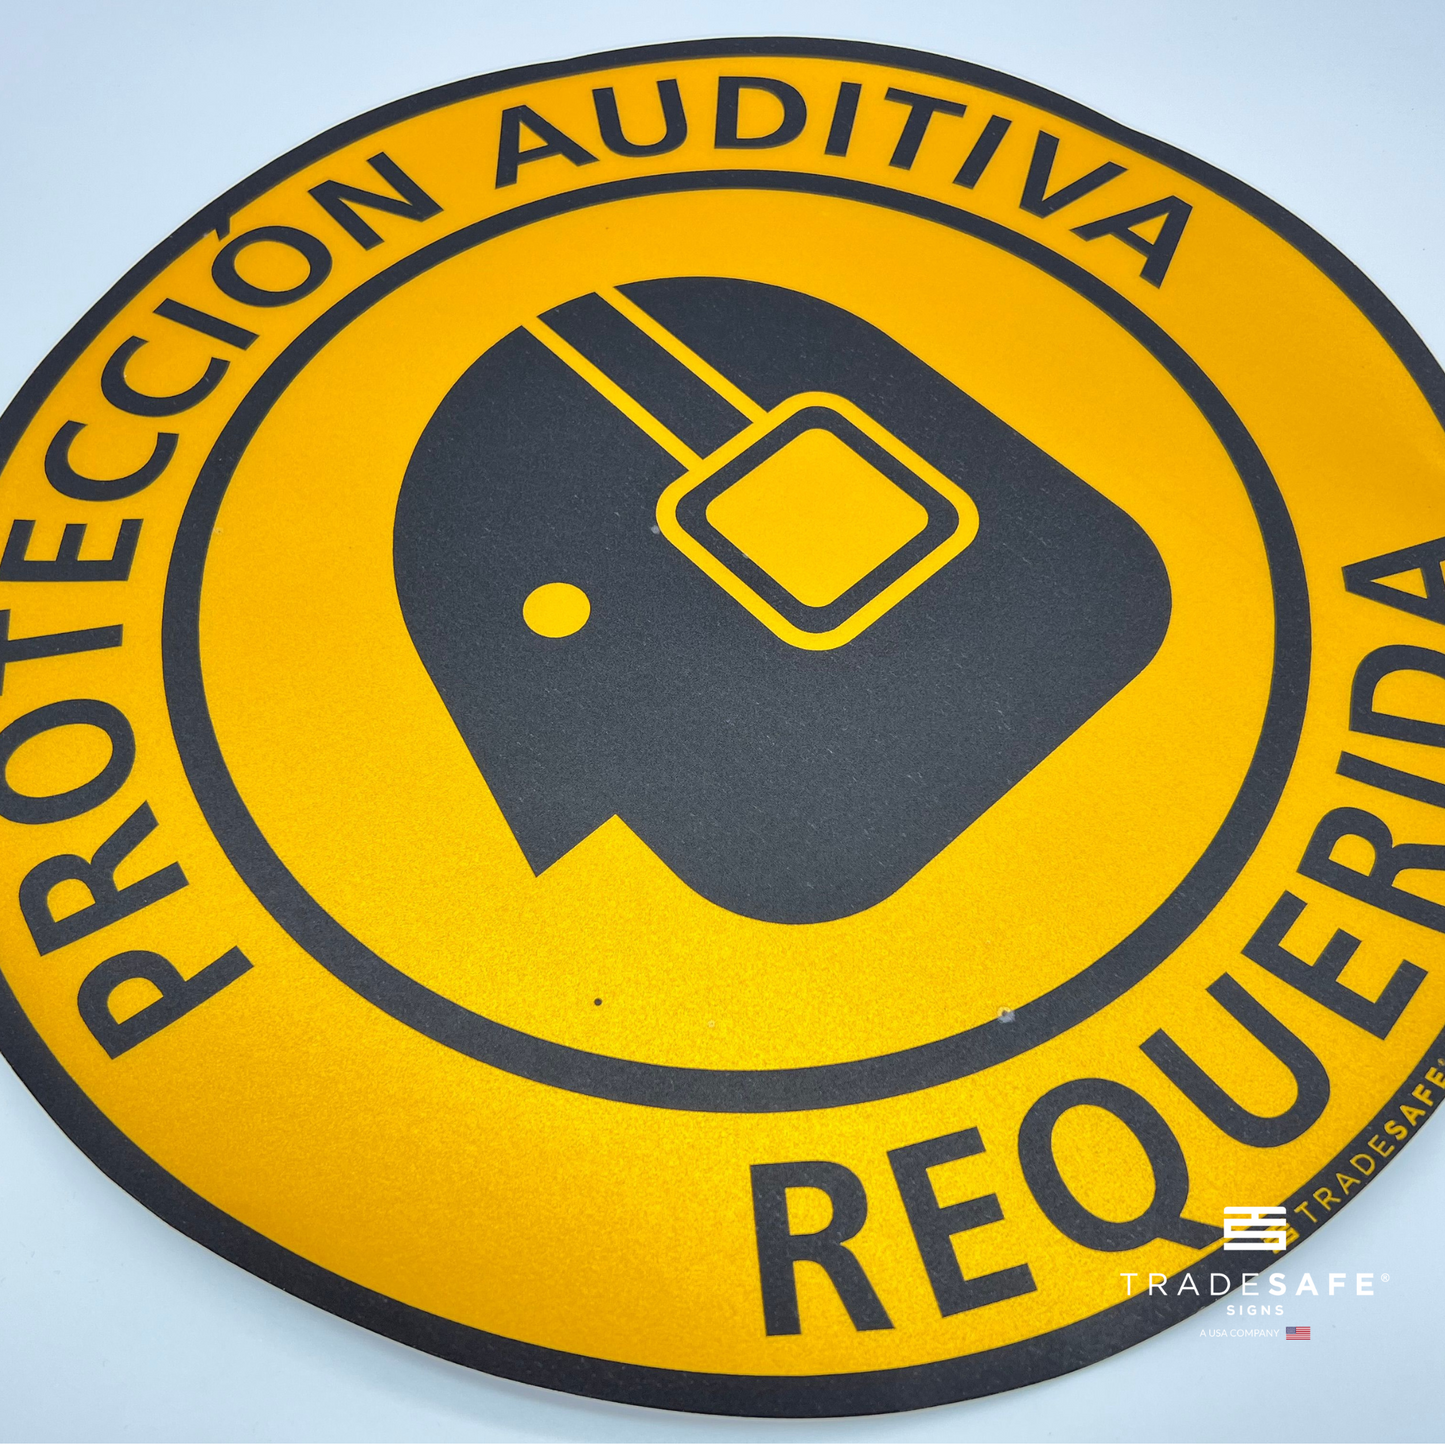 close-up of "protección auditiva requerida" sign